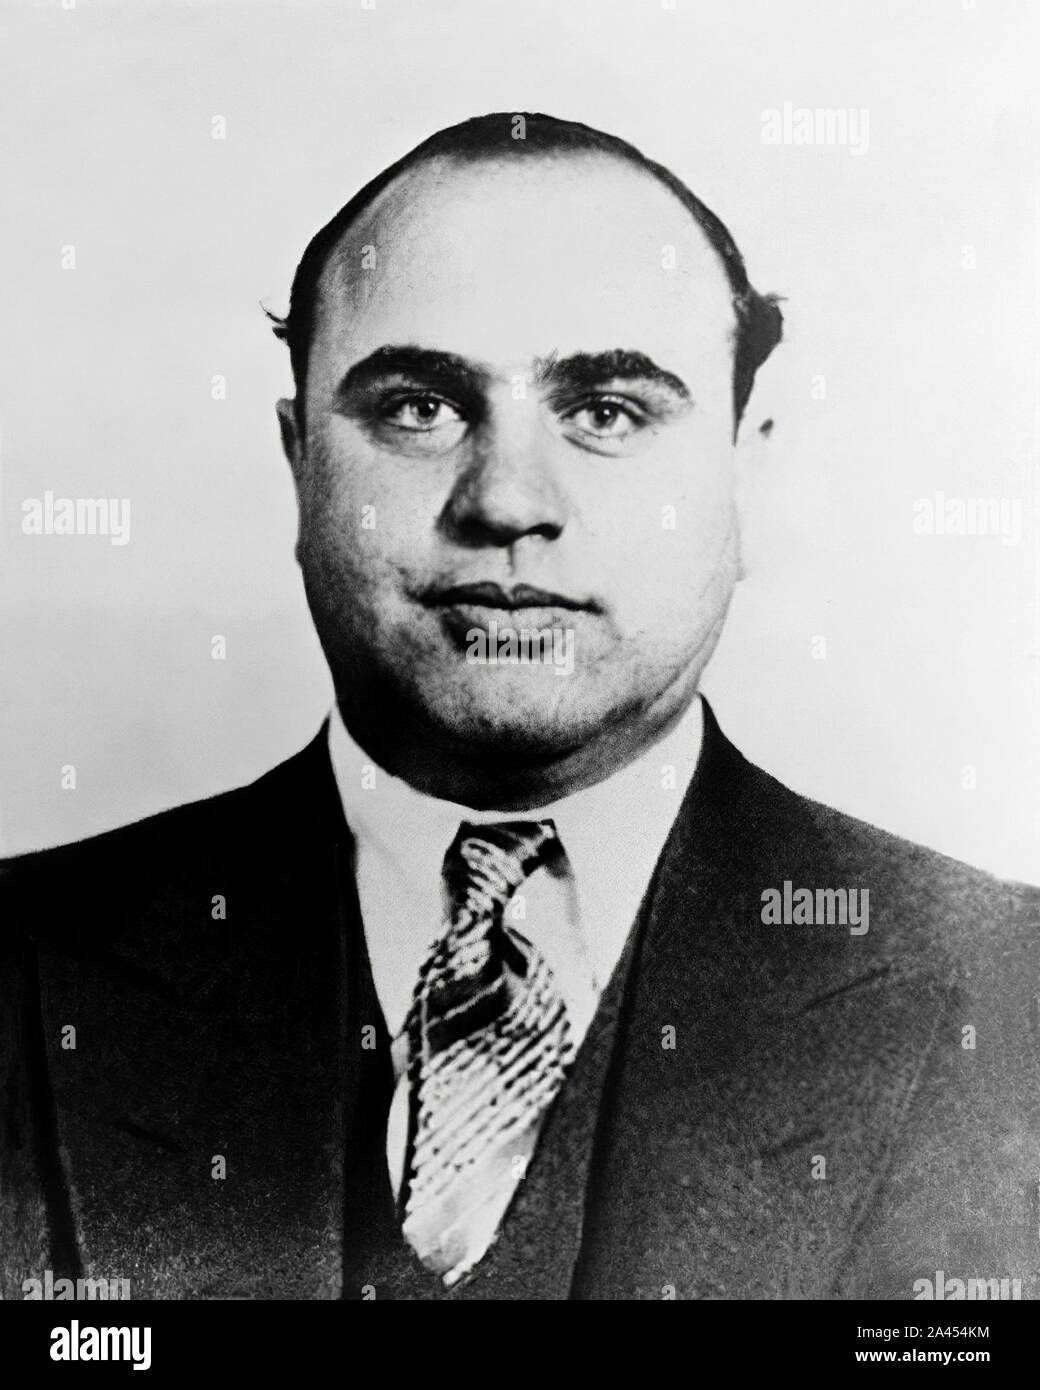 AL CAPONE - US gangster (1899-1947) Stock Photo